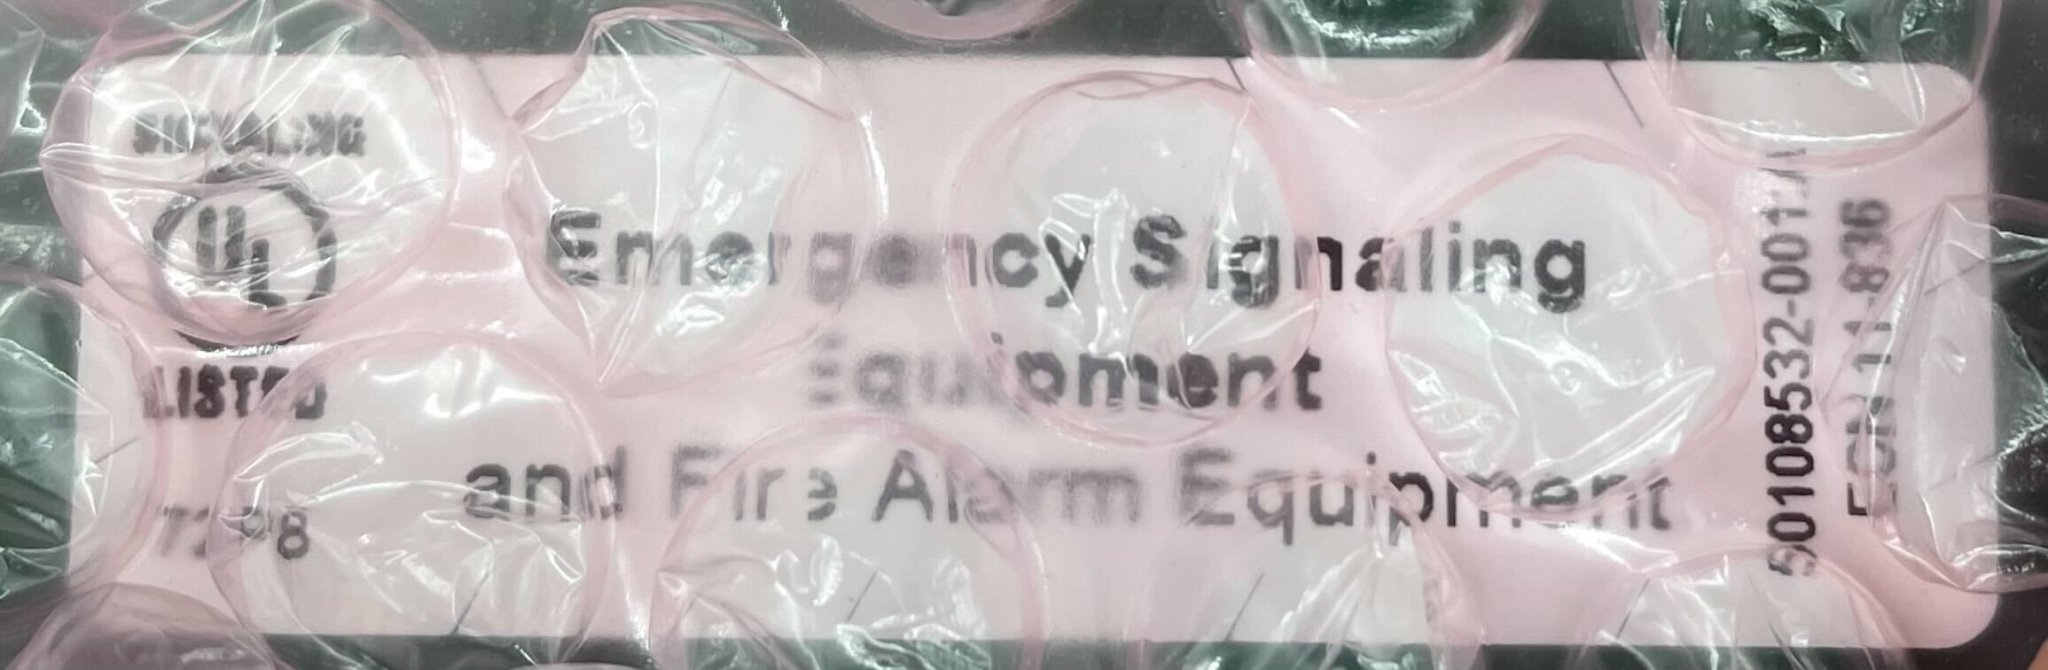 Silent Knight ECS-CE4 - The Fire Alarm Supplier